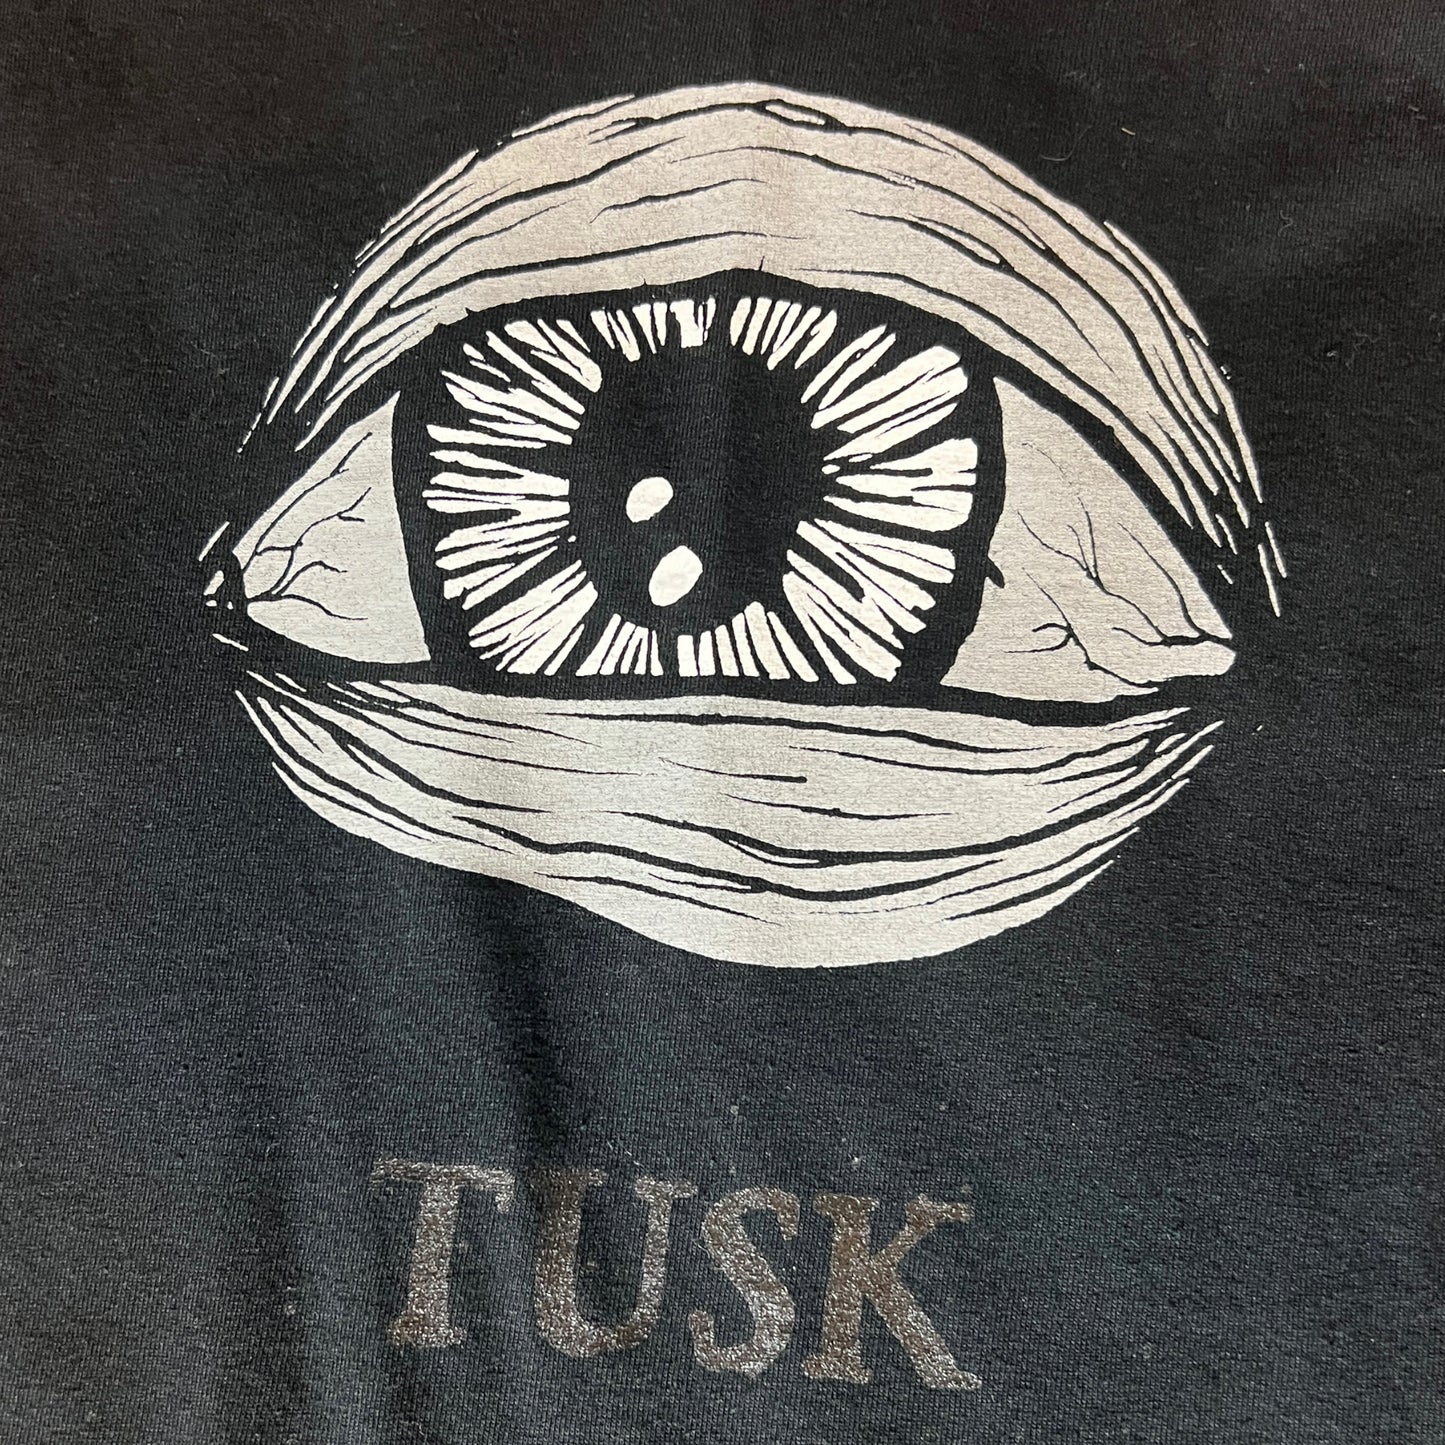 TUSK Band Long Sleeve T-Shirt Size L